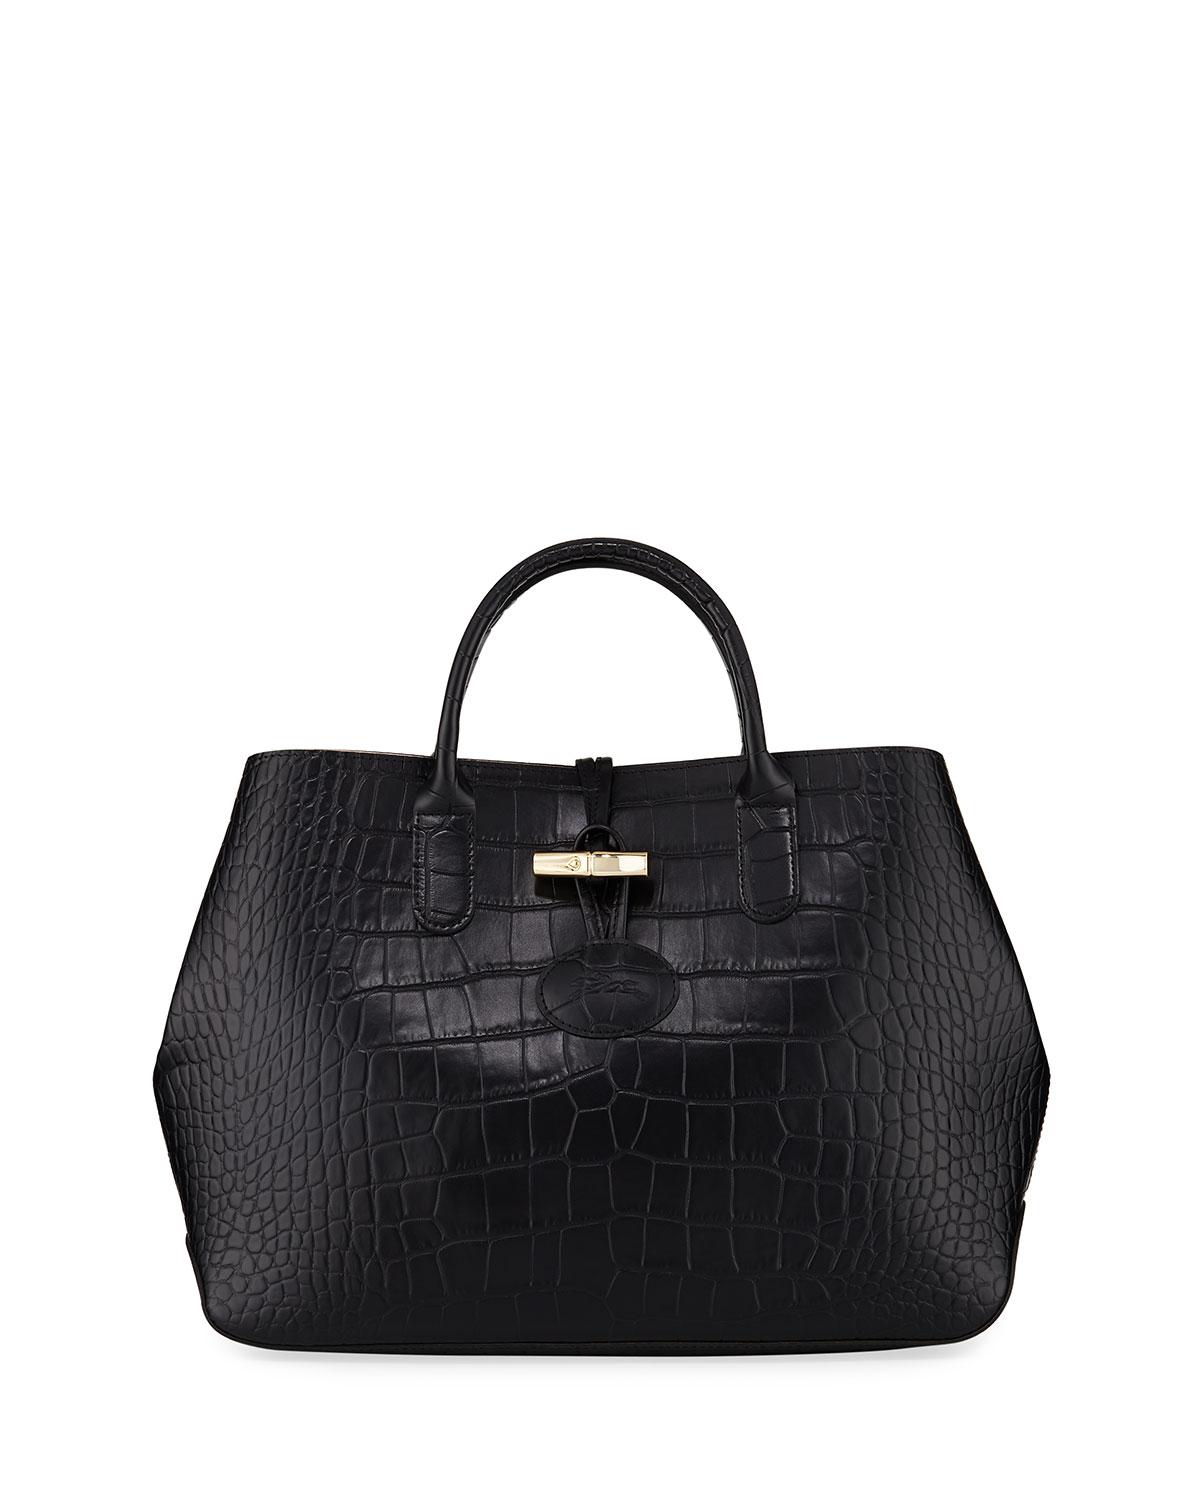 Longchamp Leather Crocodile-embossed Satchel Bag in Black - Lyst